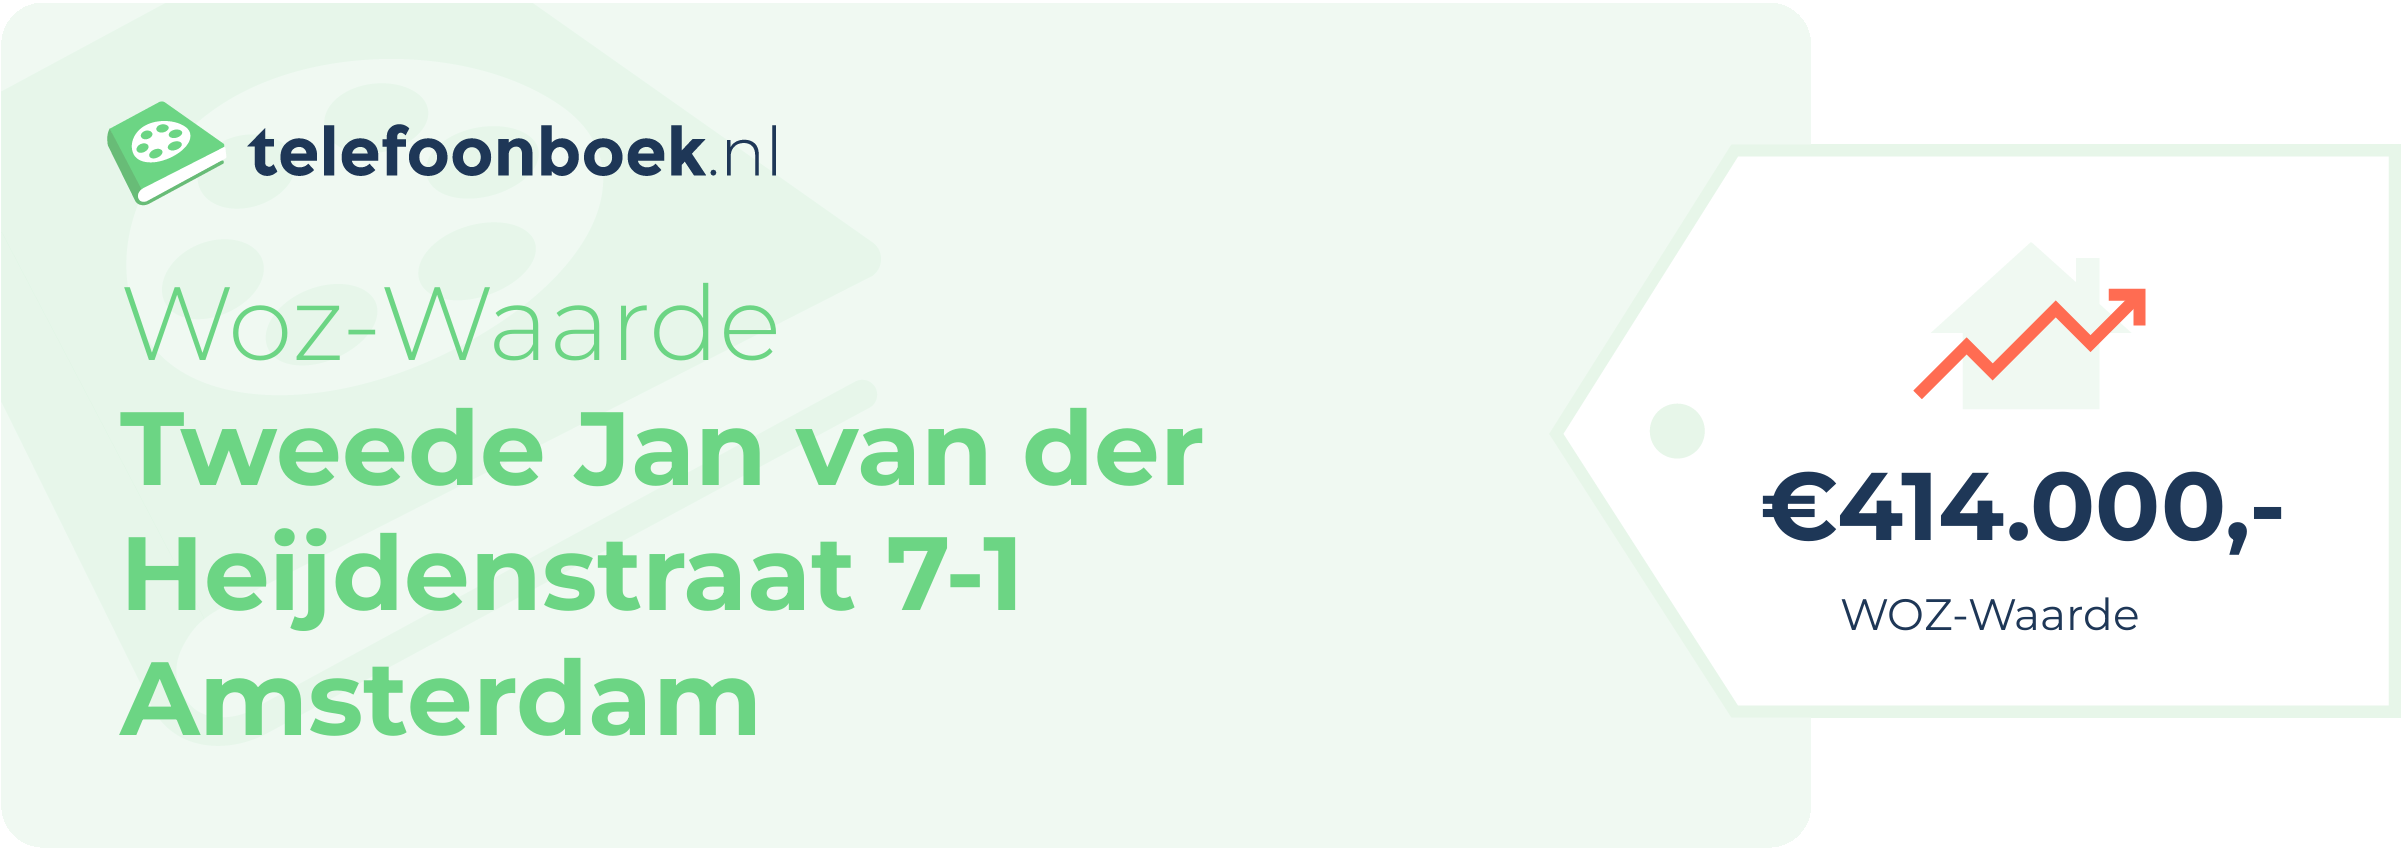 WOZ-waarde Tweede Jan Van Der Heijdenstraat 7-1 Amsterdam